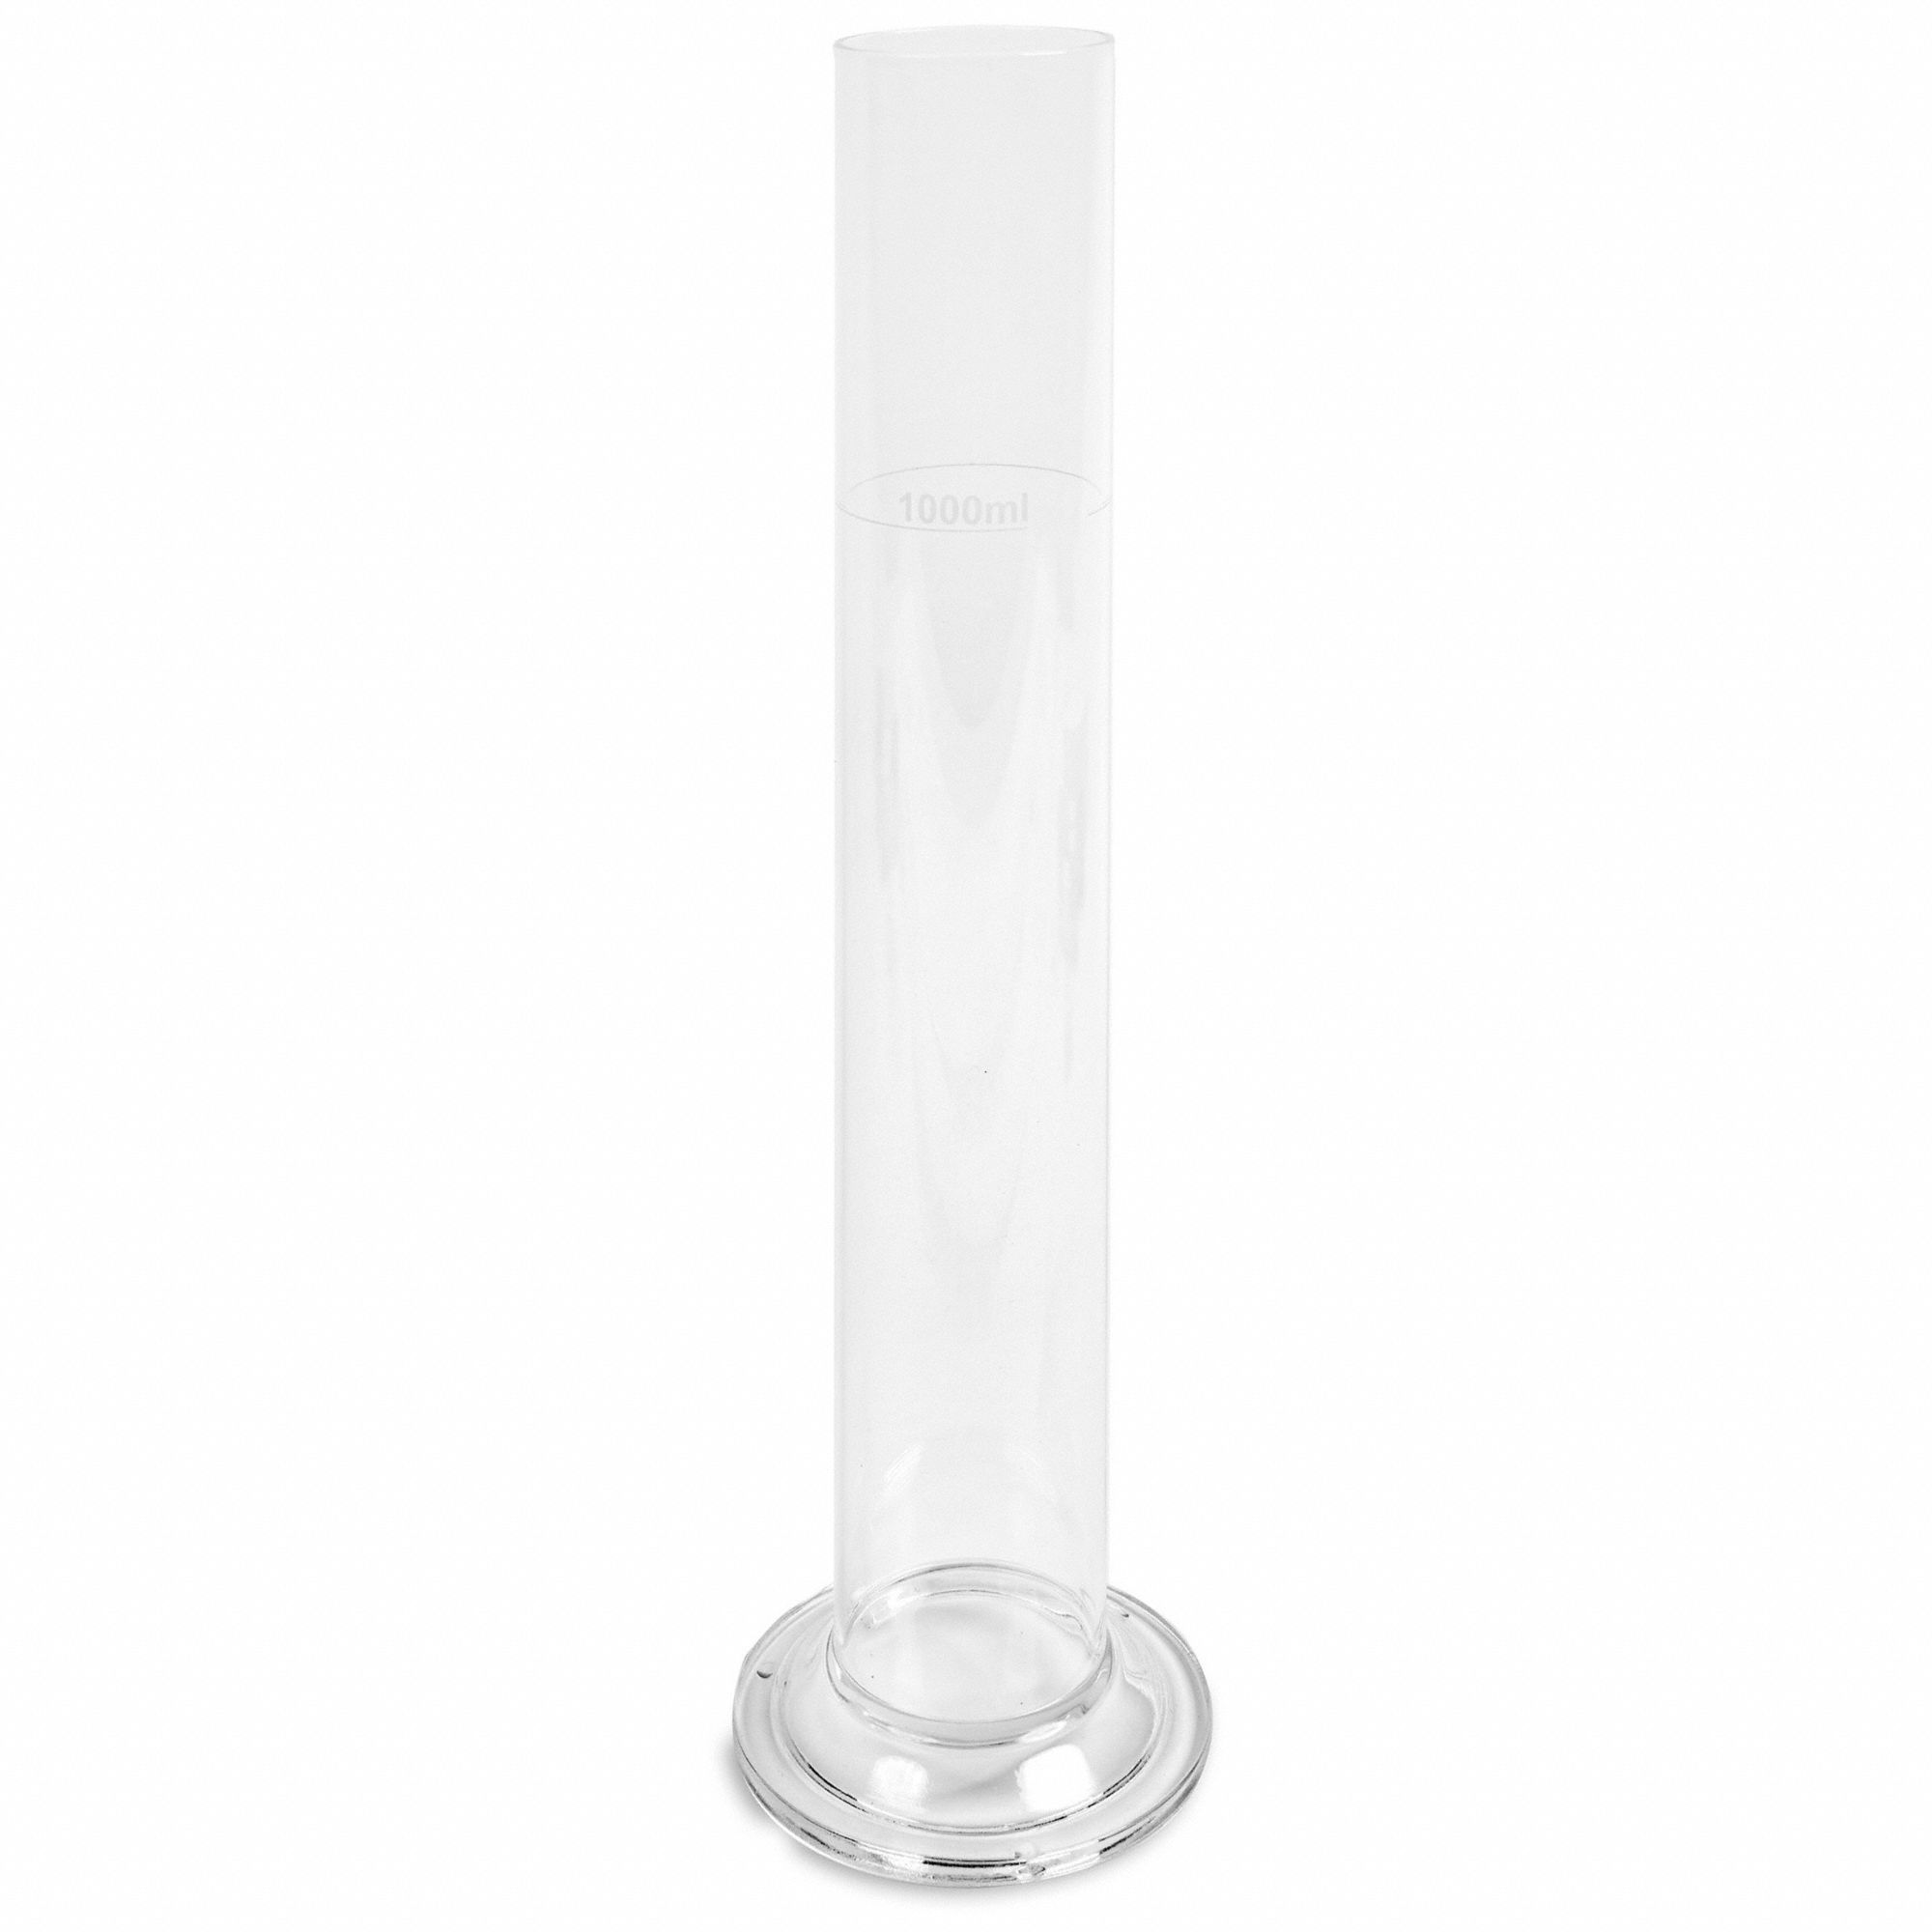 Hydrometer Jar, 1000 mL: 1,000 mL Labware Capacity - English, Borosilicate Glass